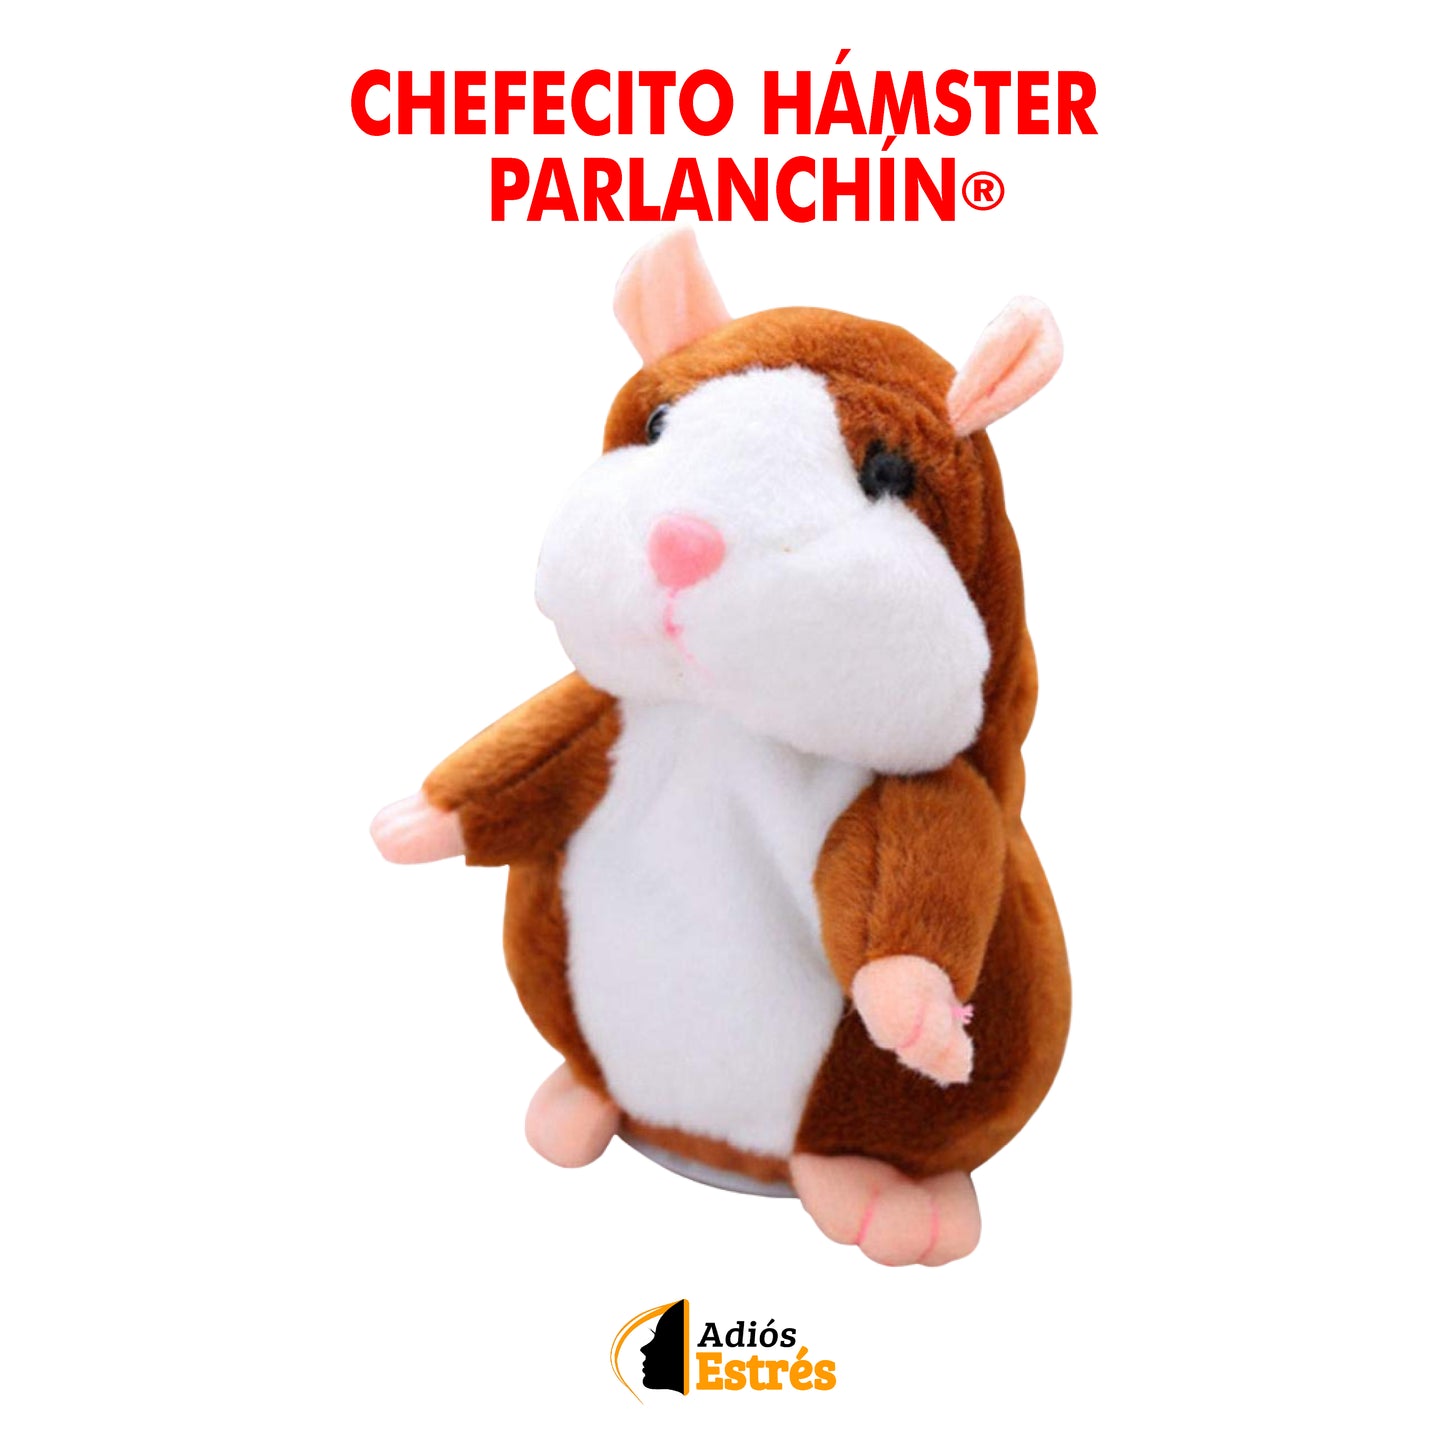 Chefecito Hamster Parlanchín®